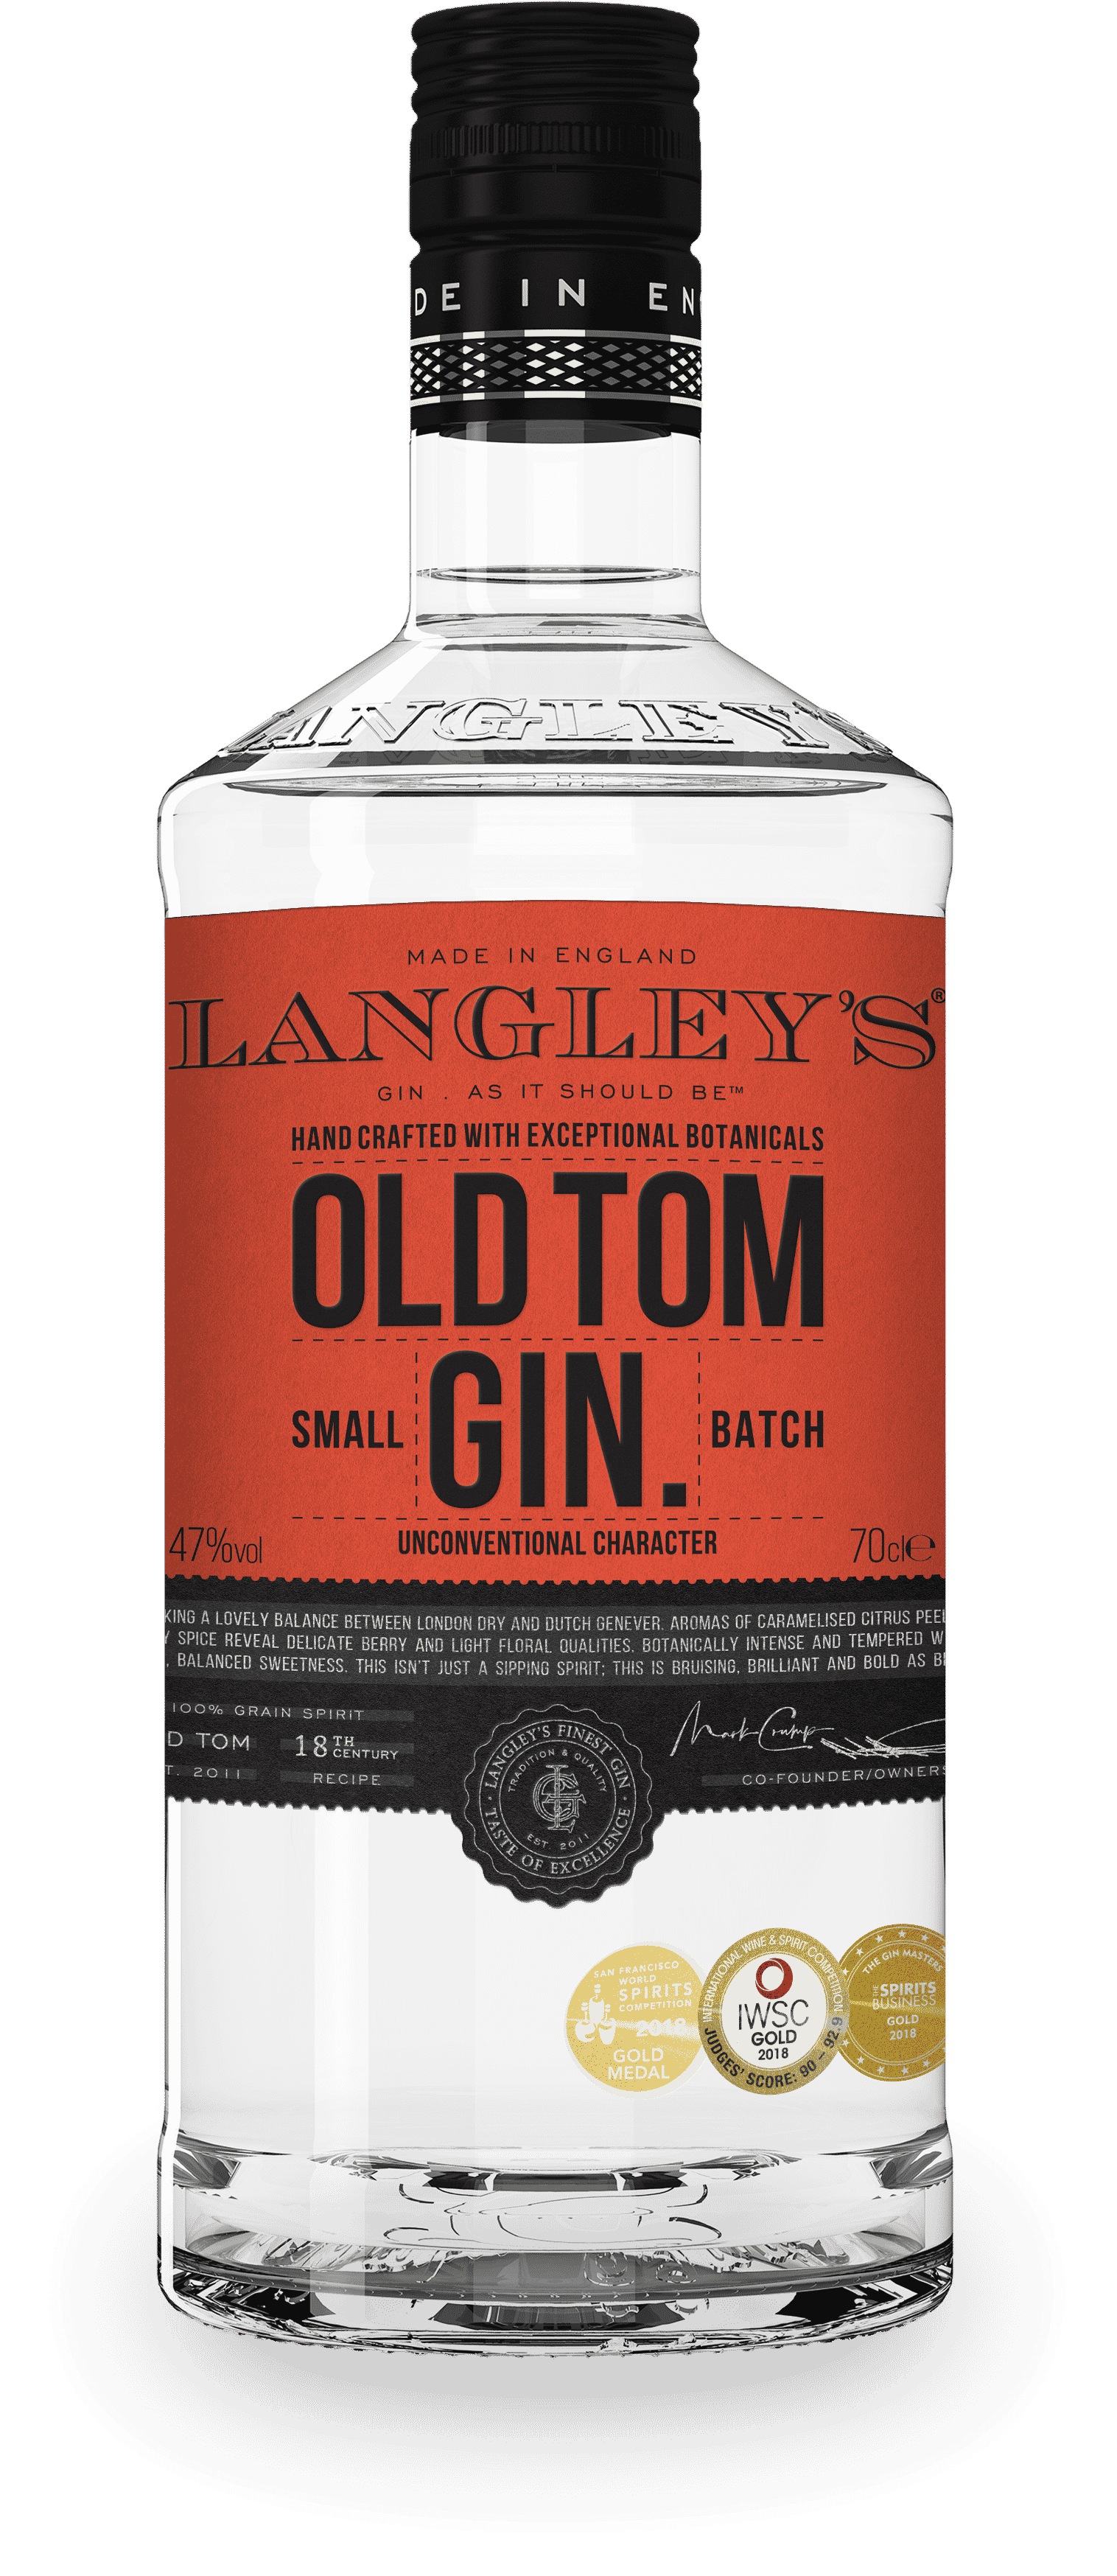 Langleys old tom gin bouteille